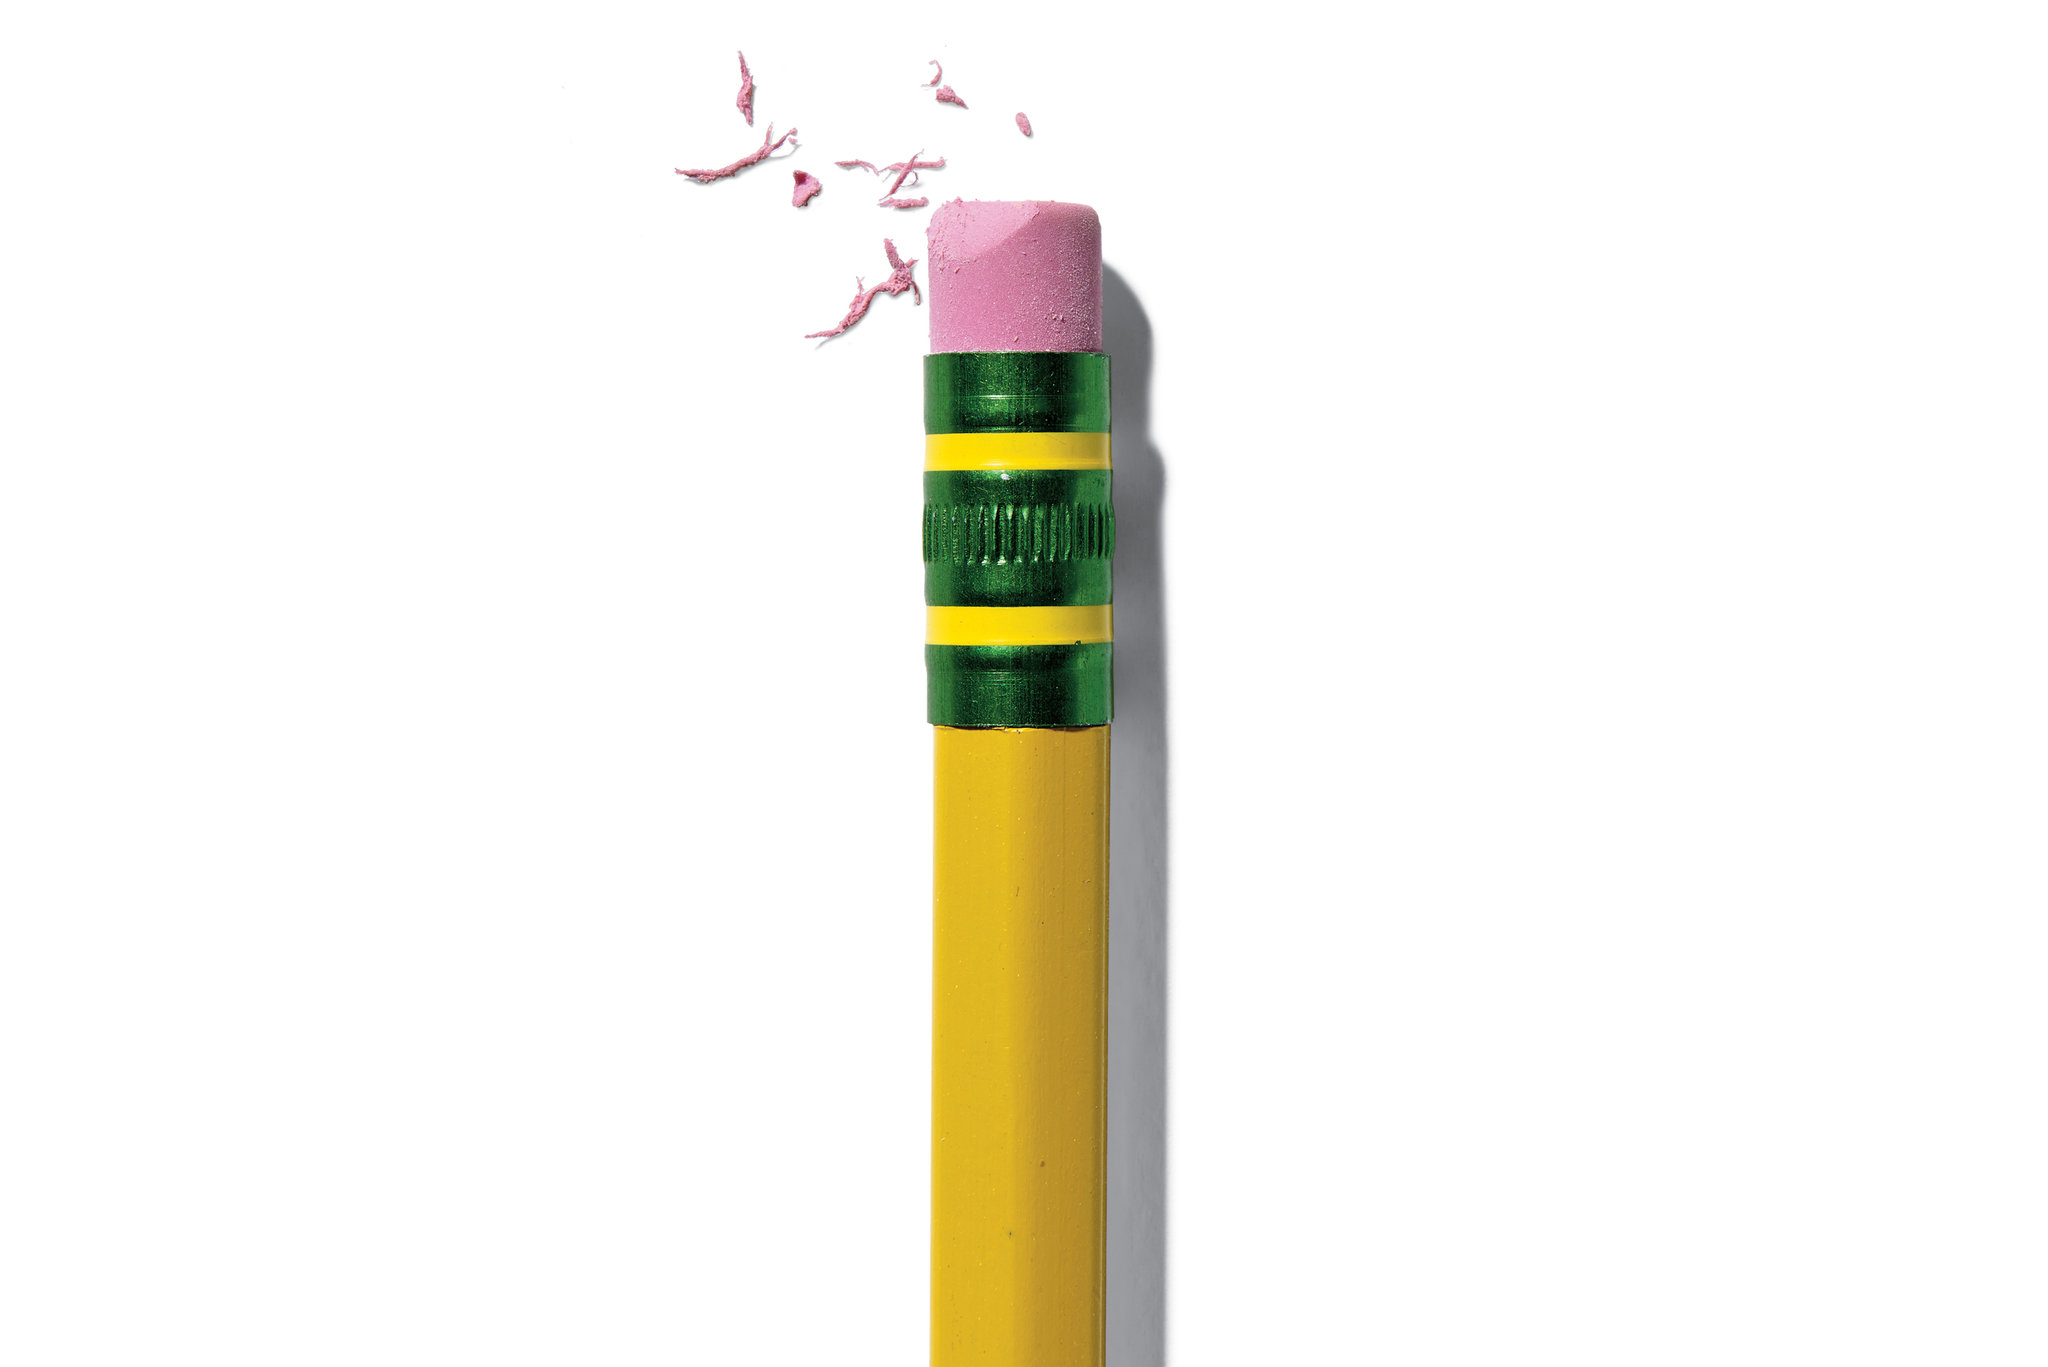     Pencil Eraser Displaying 19 Images For Pencil Eraser Toolbar Creator